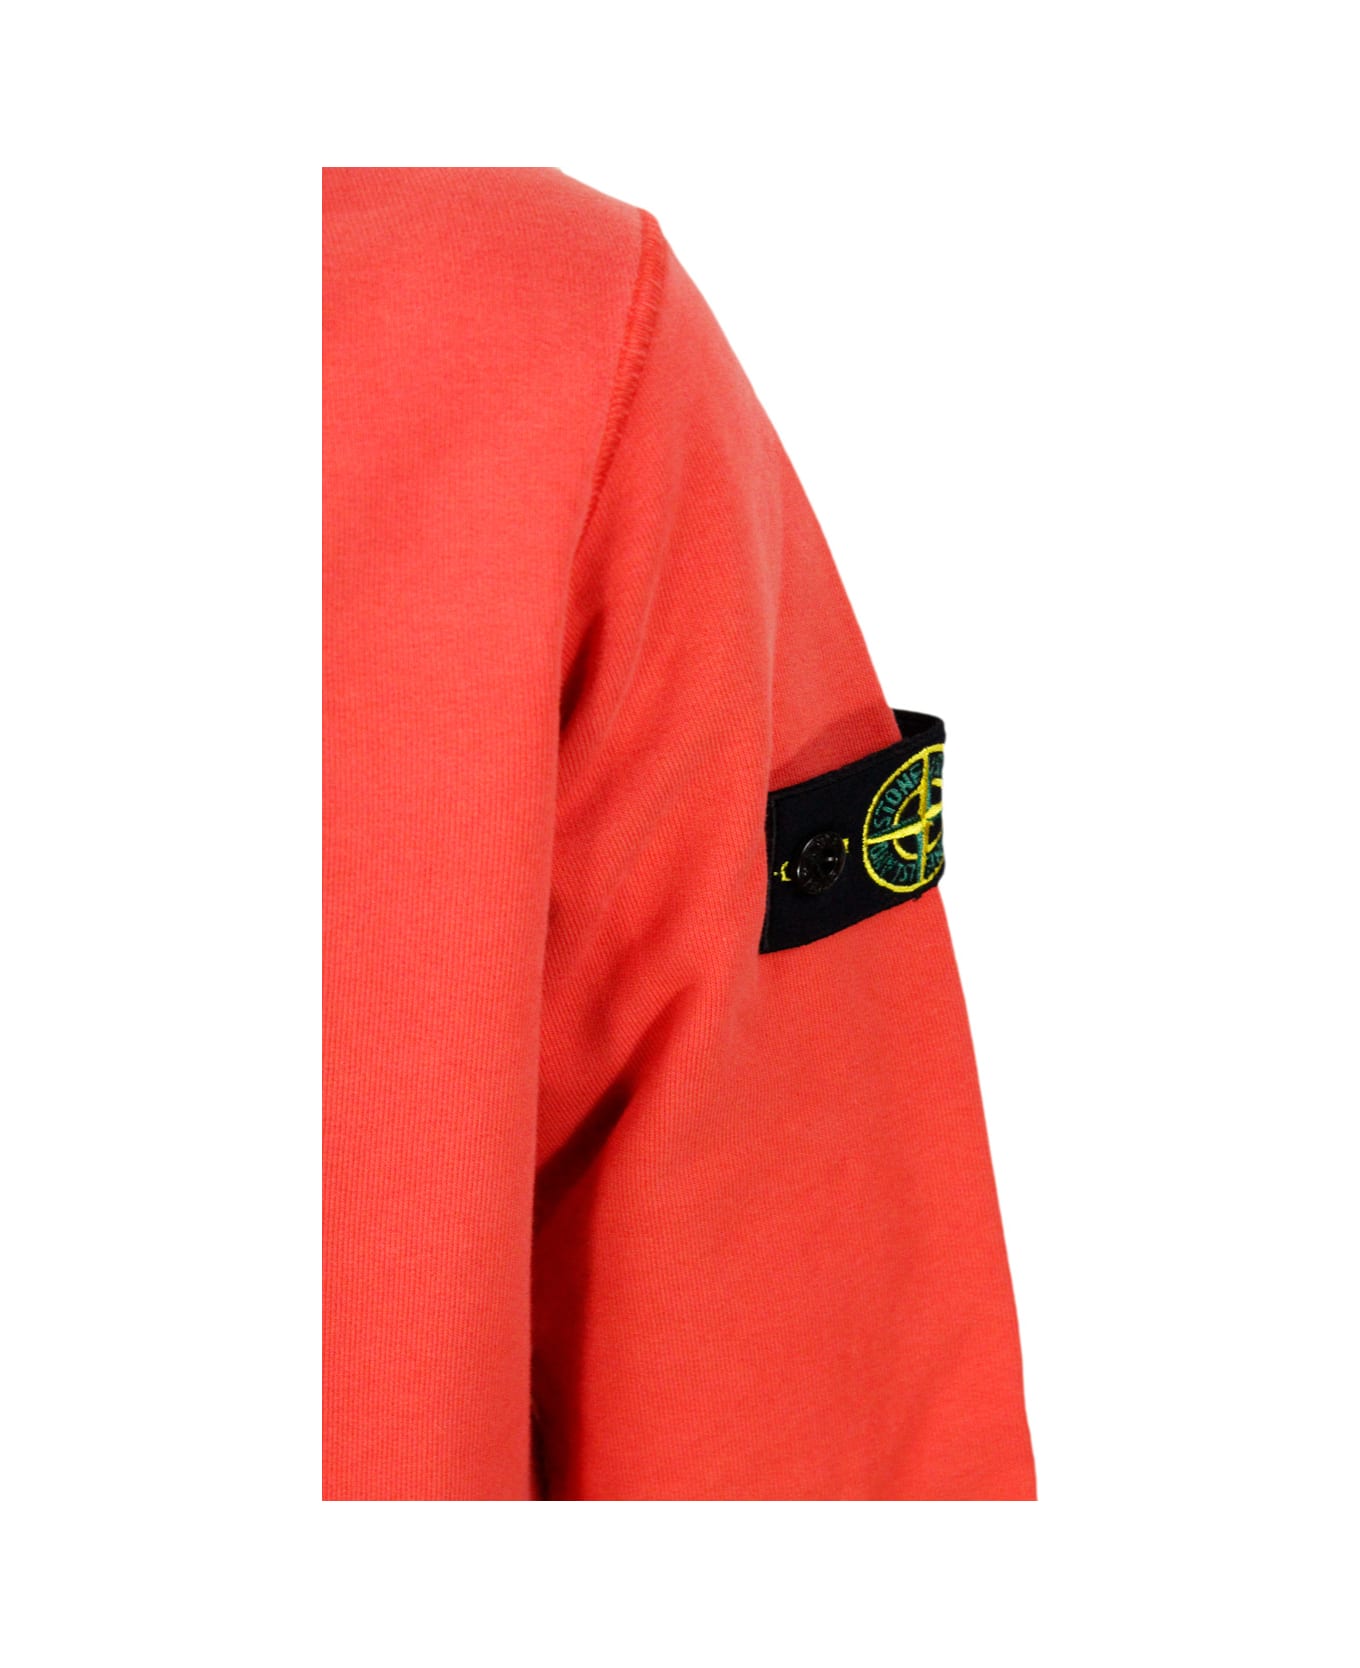 Stone Island Cotton Sweatshirt With Crew Neck And Logo On The Sleeve - Orange